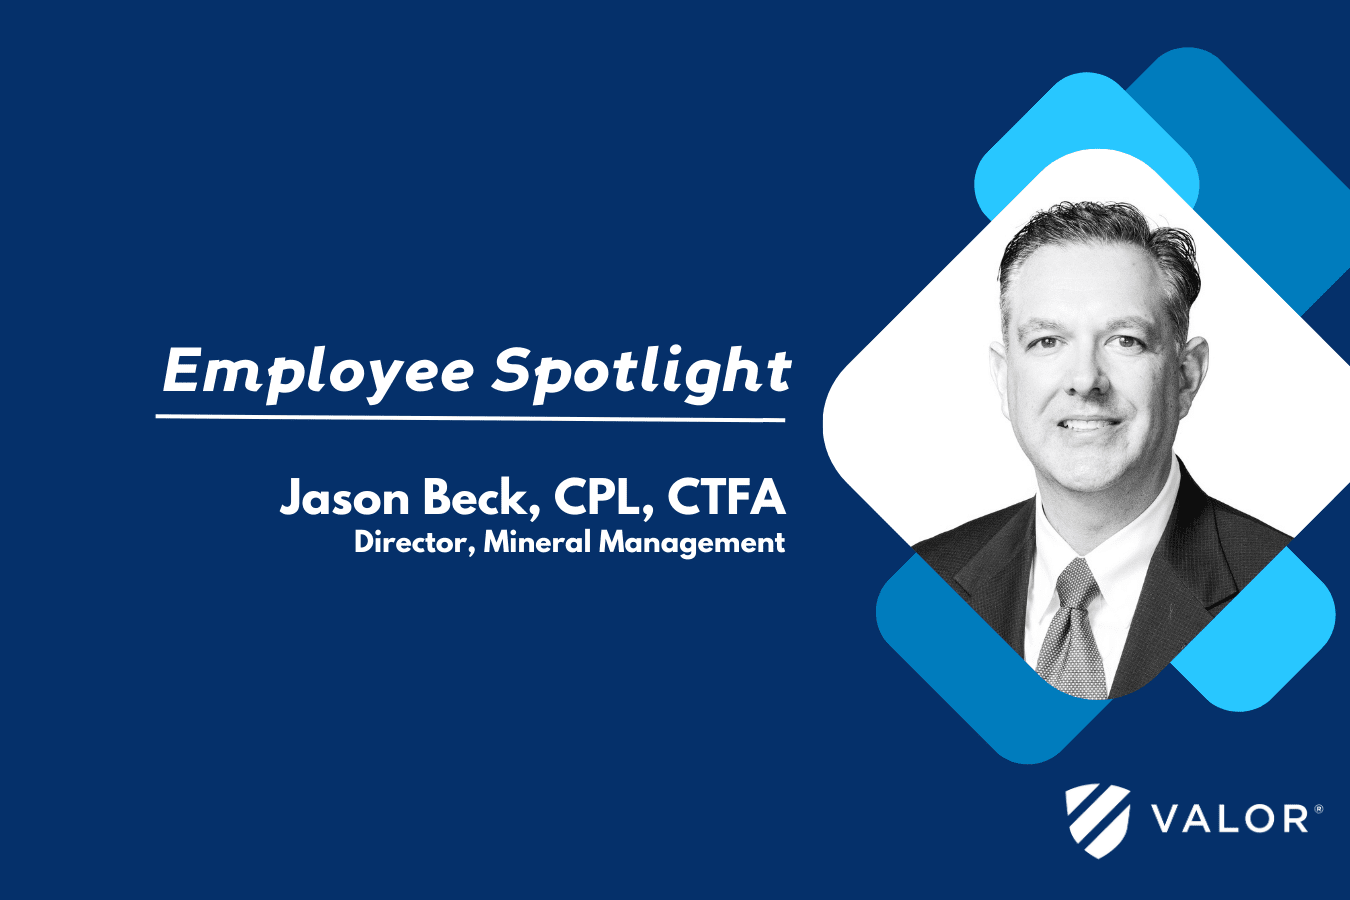 Valor Employee Spotlight - Jason Beck, Director of Mineral Management